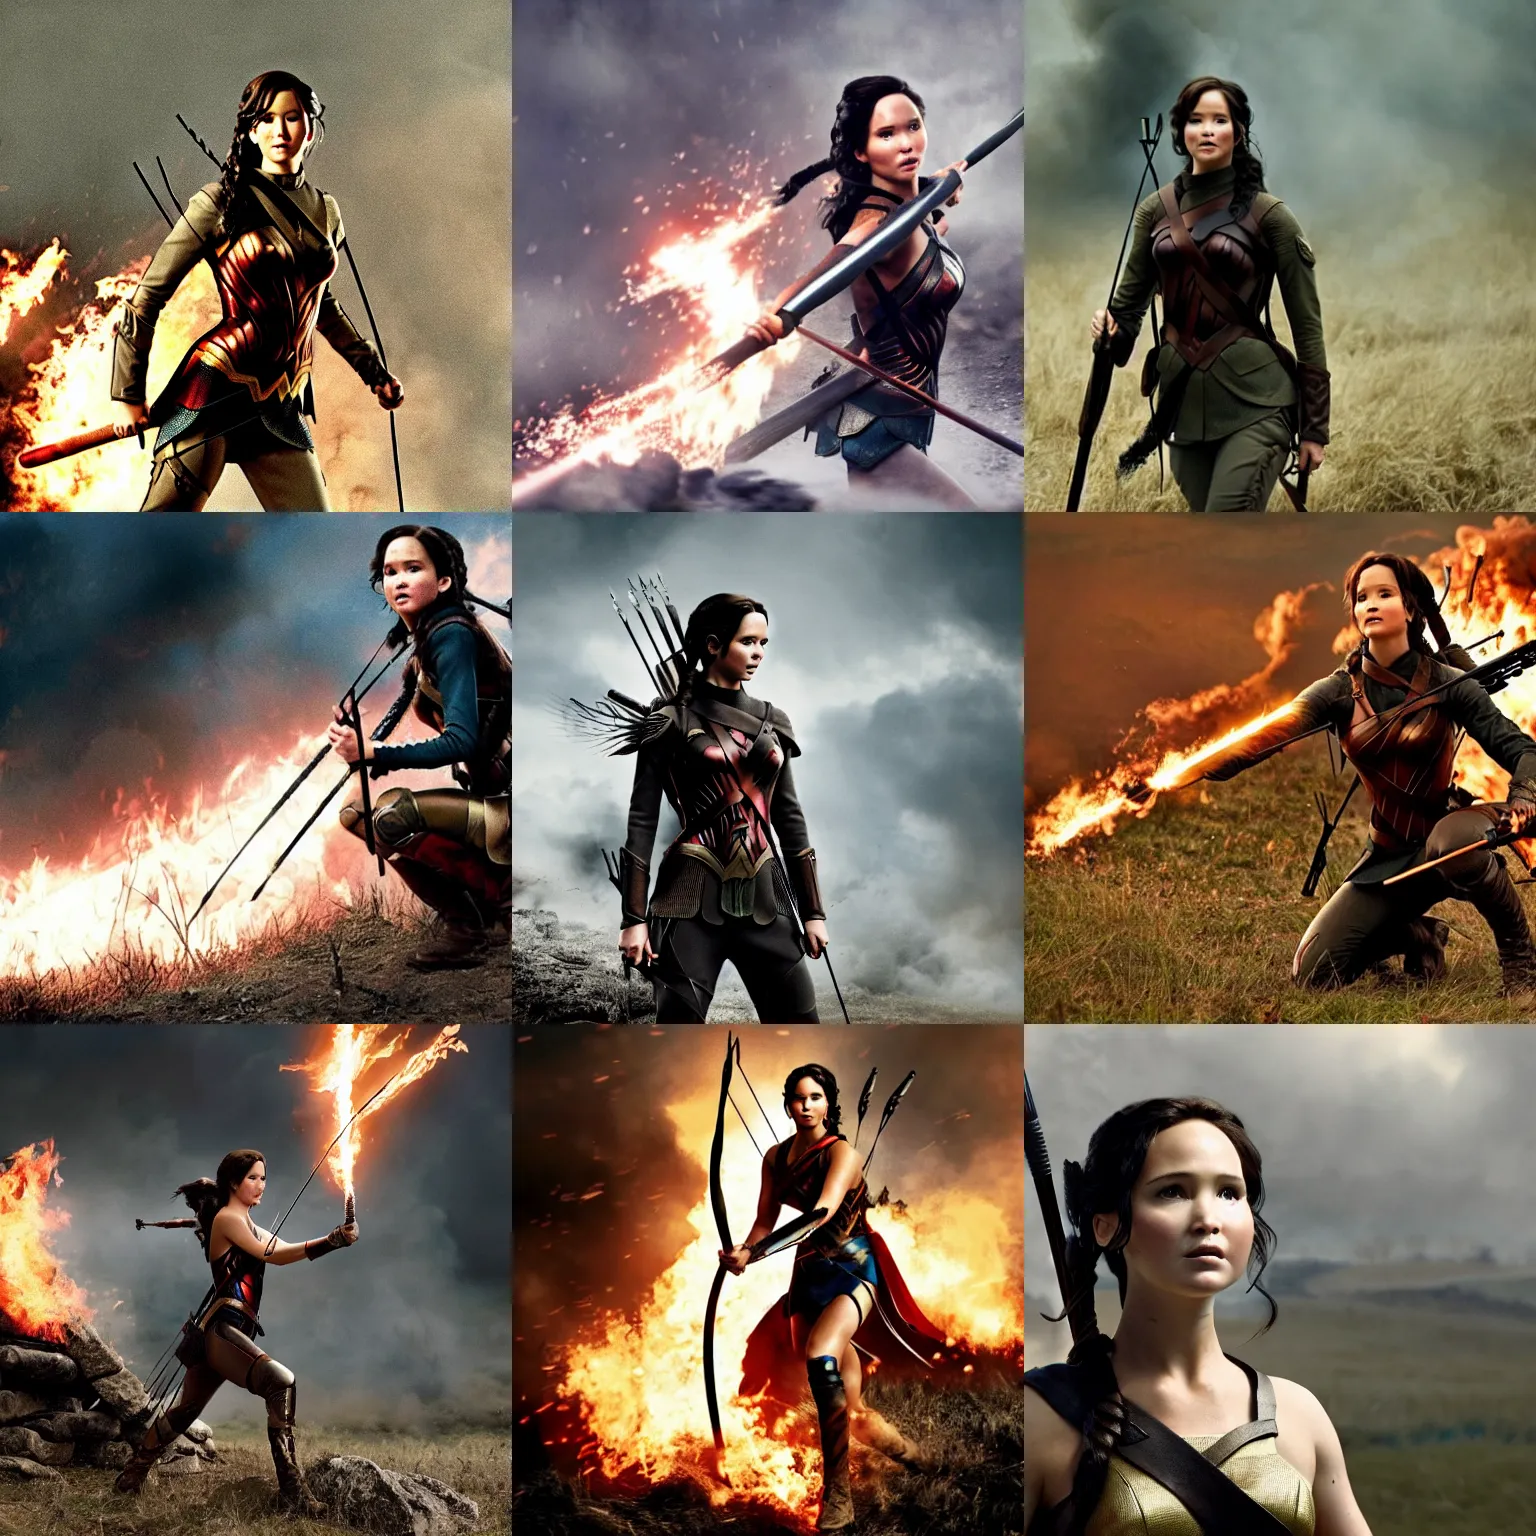 Prompt: Katniss Everdeen as Wonder Woman, on a WW1 battlefield, film still, cinematic, dramatic lighting